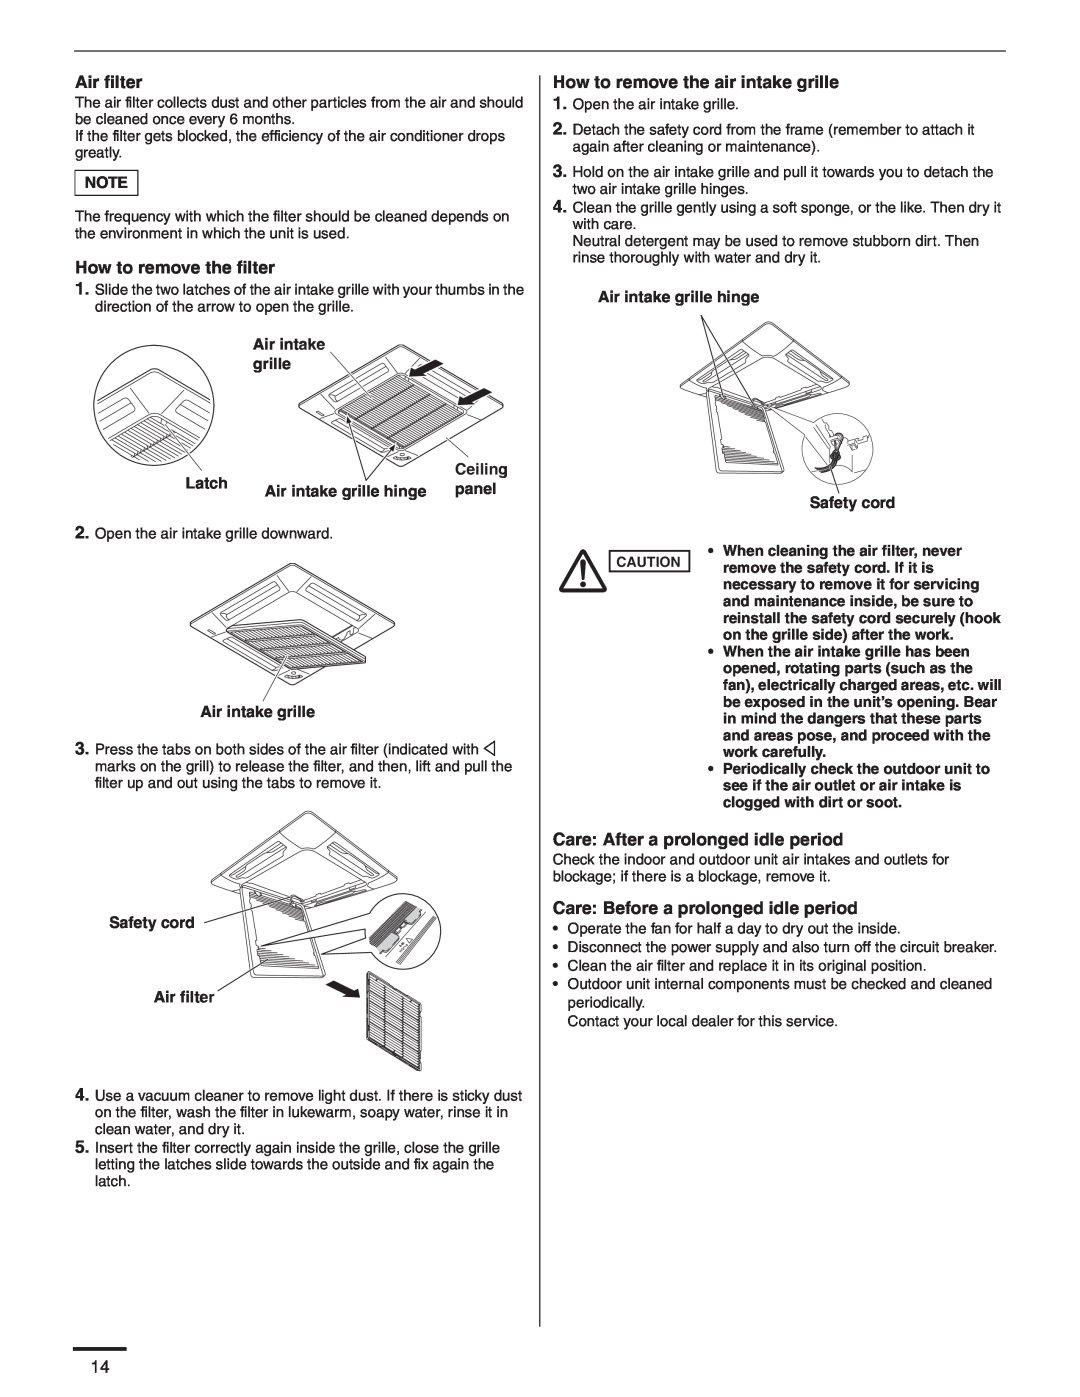 Panasonic CU-KS18NKUA Air filter, How to remove the filter, How to remove the air intake grille, Latch, Ceiling, panel 